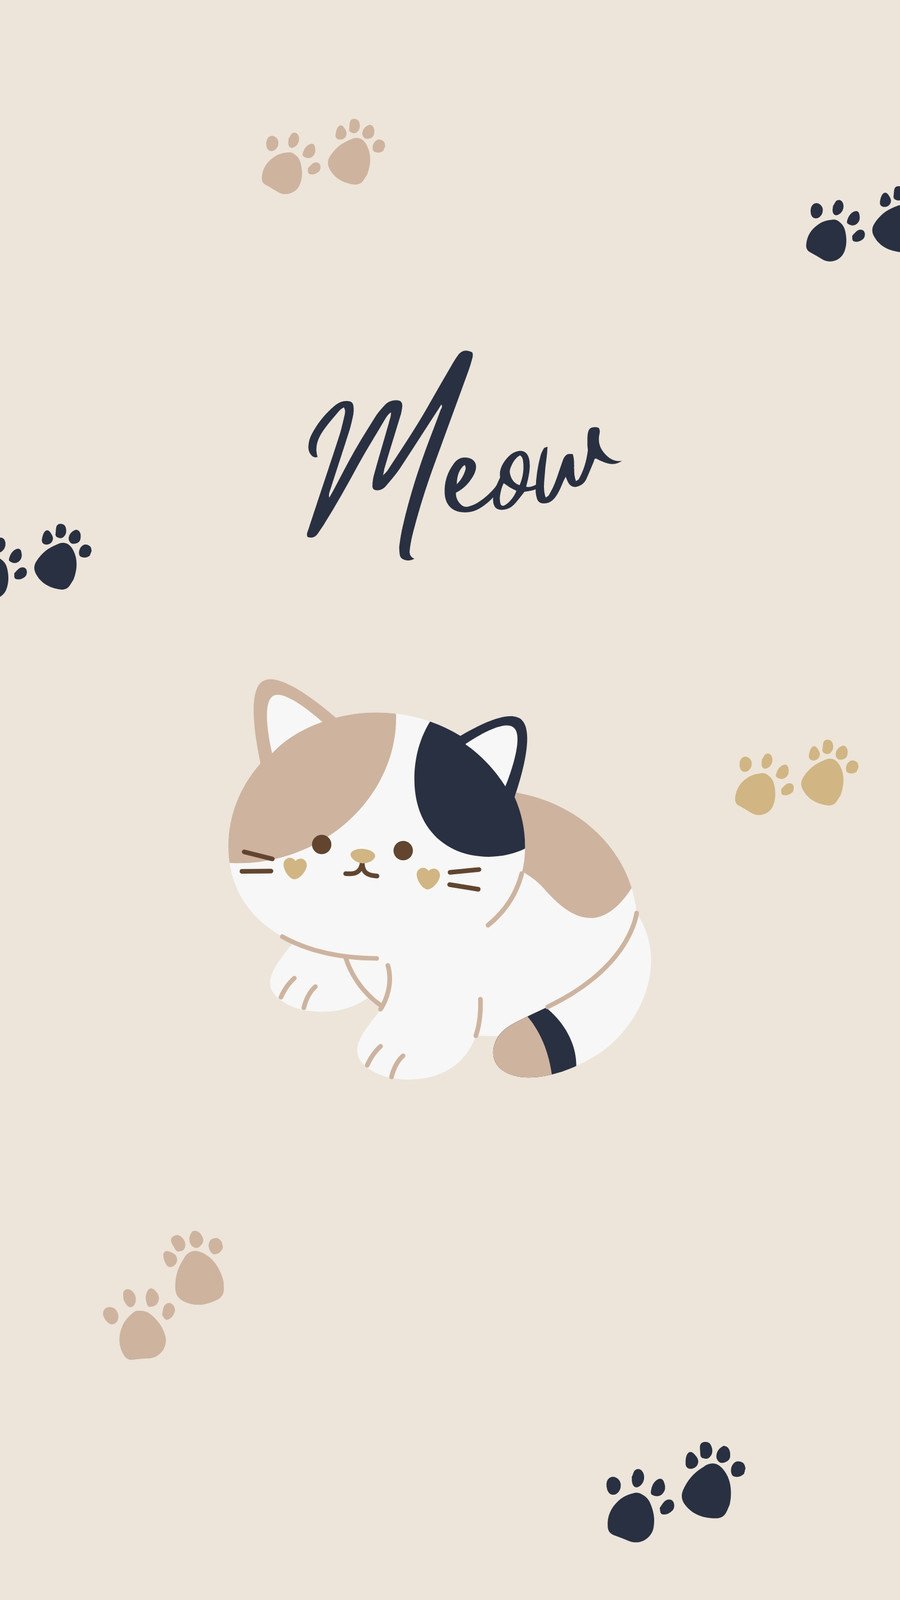 Free customizable cat phone wallpaper templates